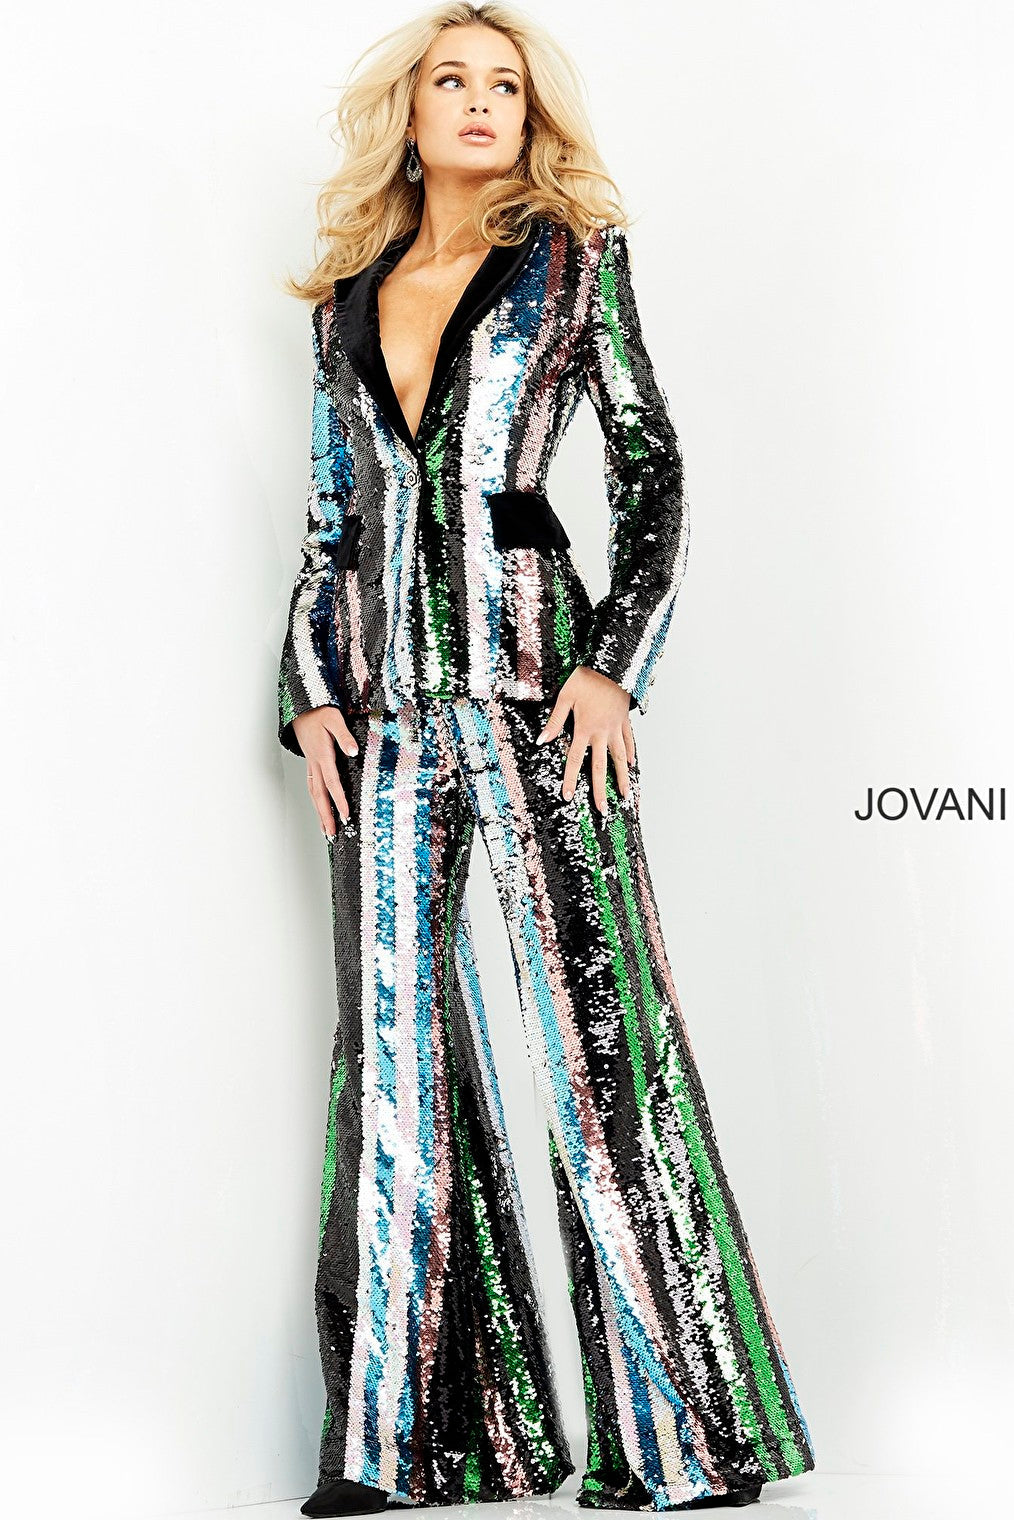 Multi striped Jovani pant suit M02942